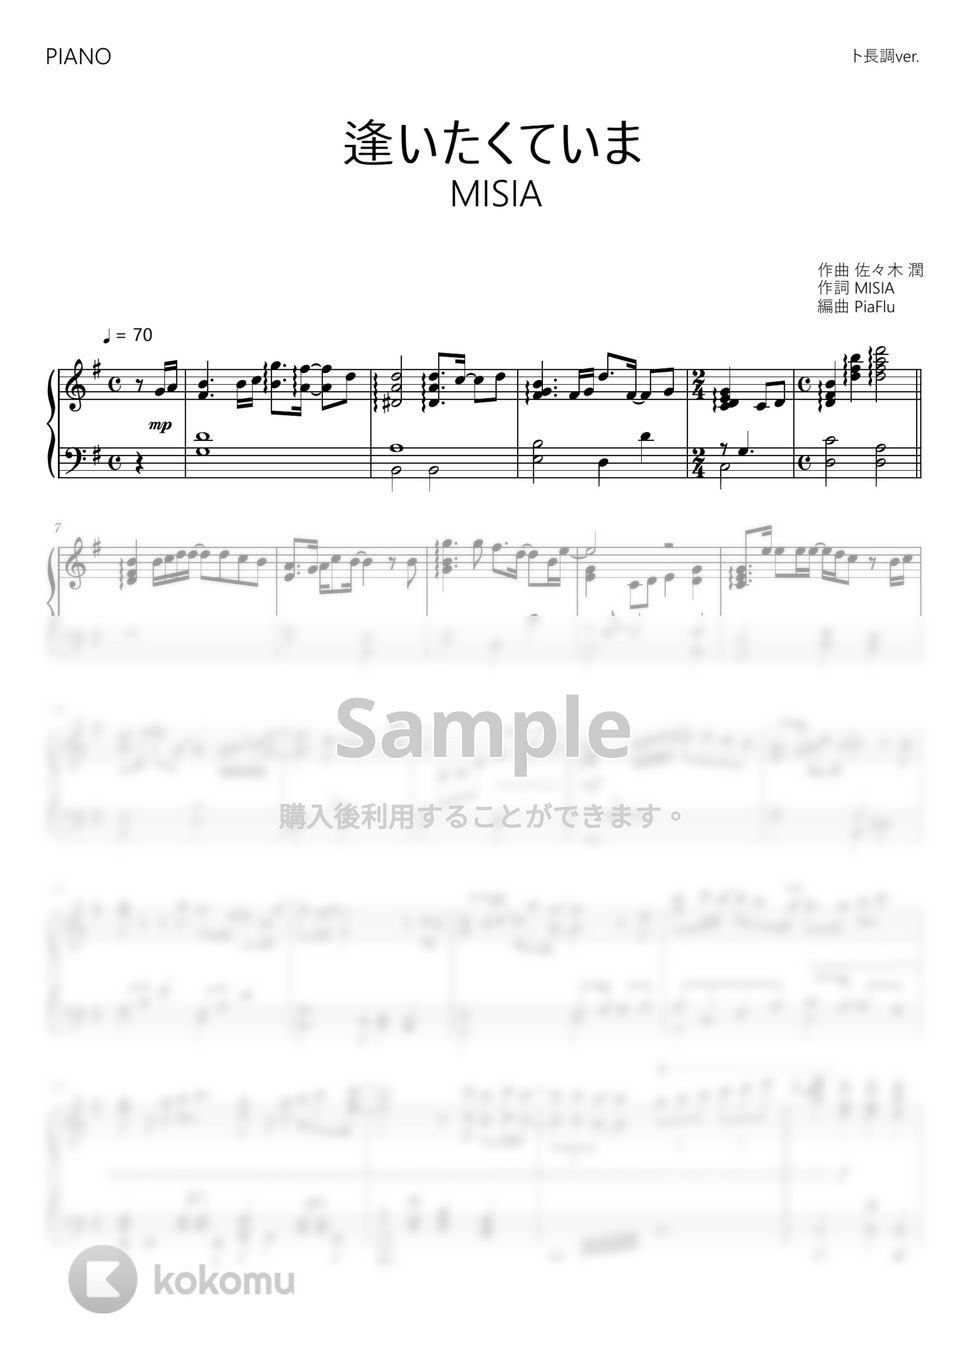 MISIA - 逢いたくていま (ト長調ver. / ピアノ) by PiaFlu